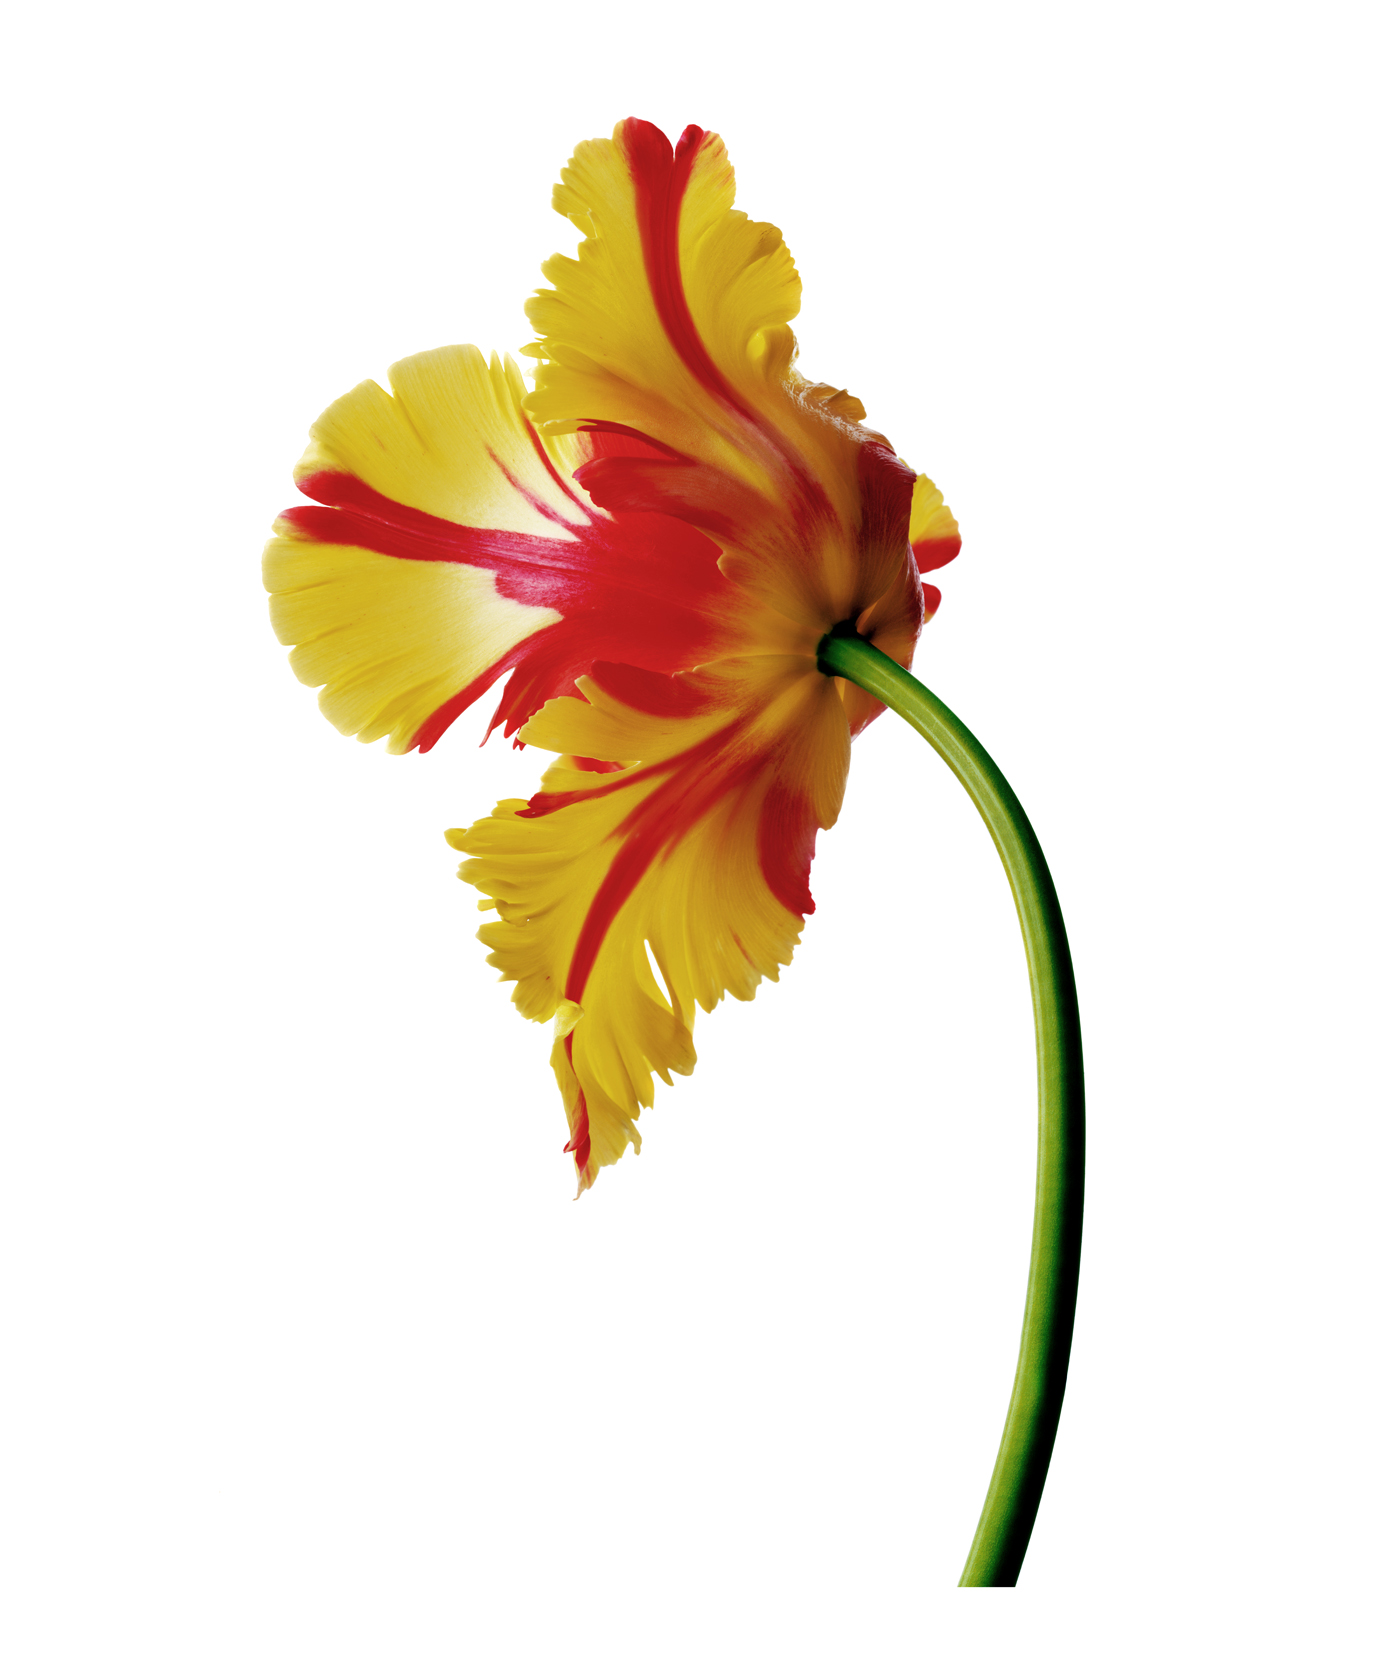 Flaming Parrot Tulip copy